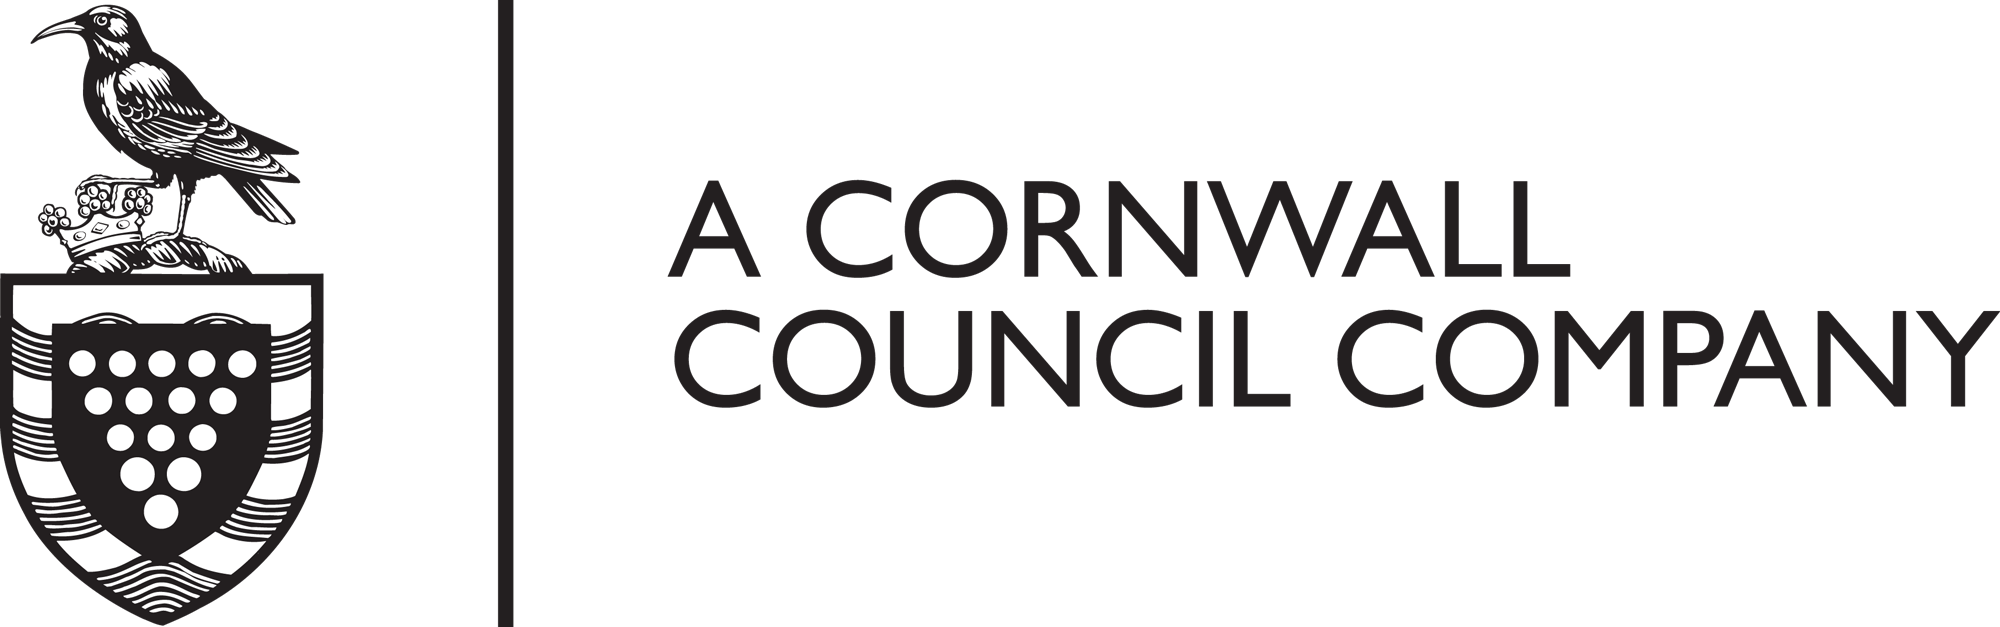 Corserv group logo